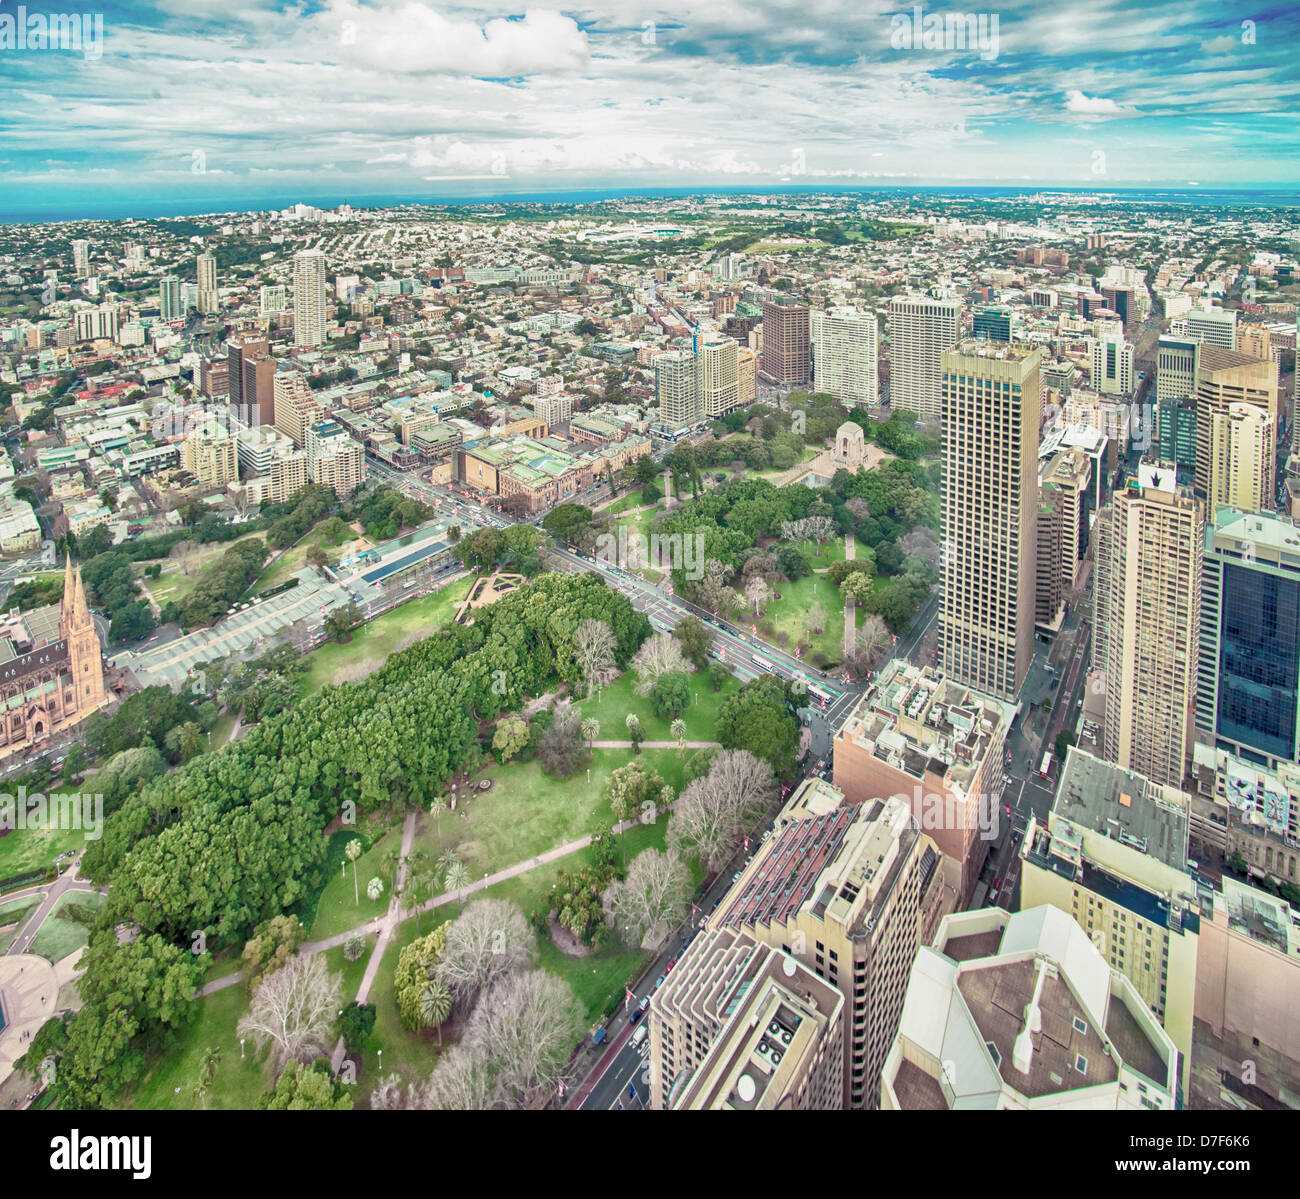 aerial view of the city of sydney australia Stock Photo